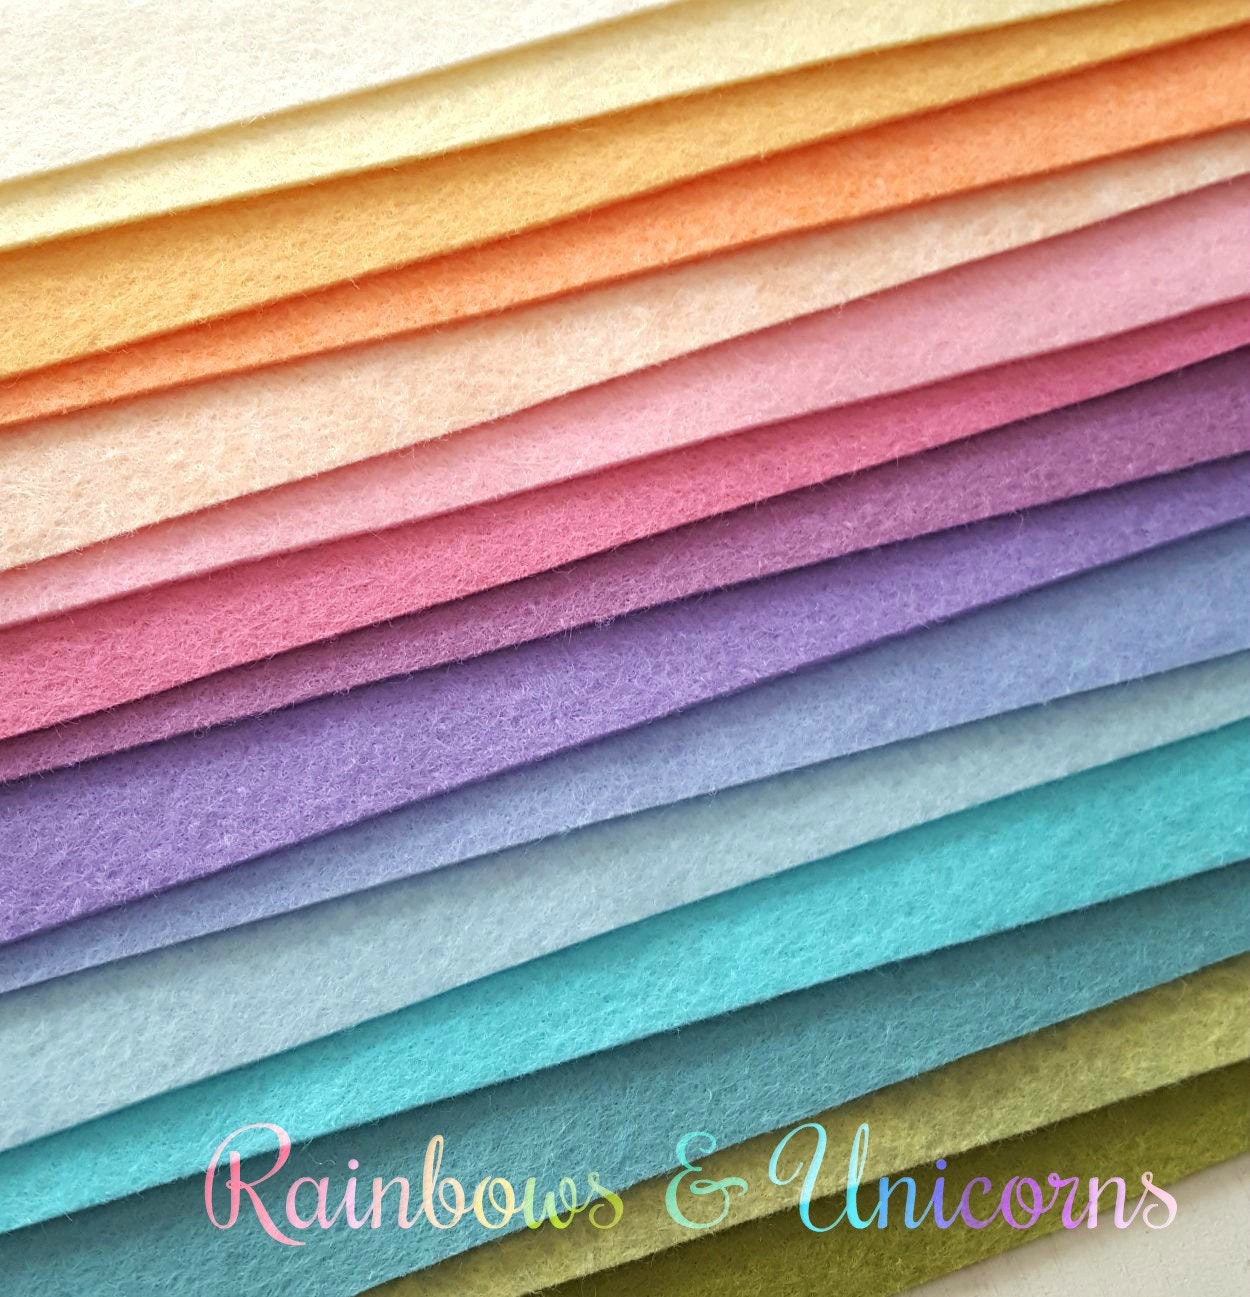 Rainbows & Unicorns Wool Blend Felt Collection - 15 6x9 Sheets